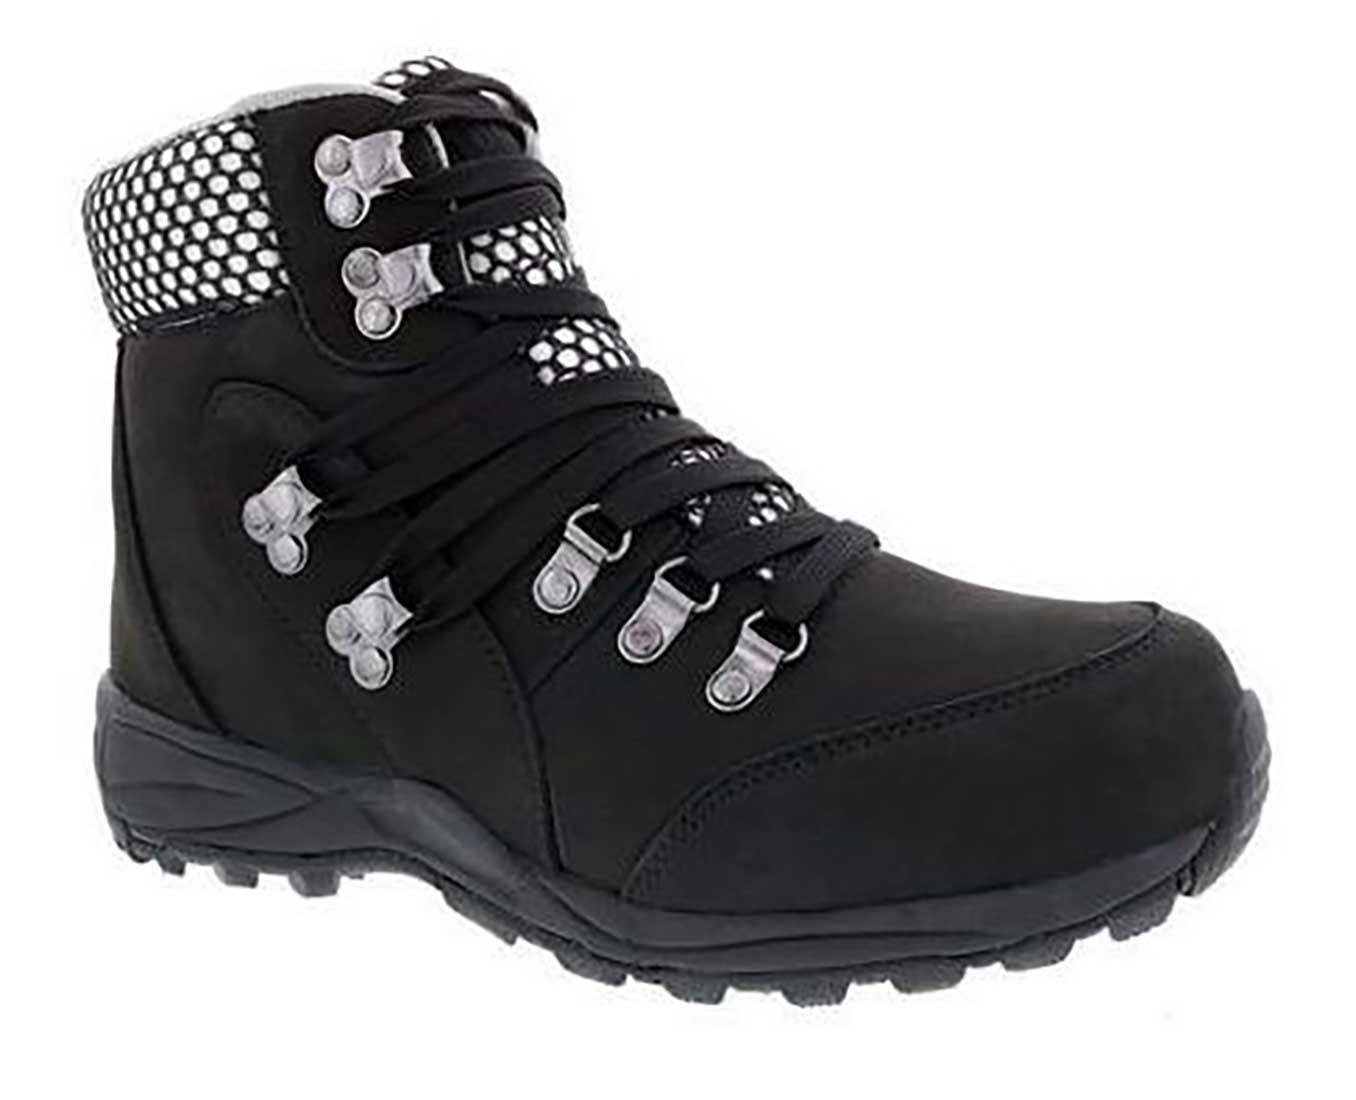 women's orthopedic hiking boots